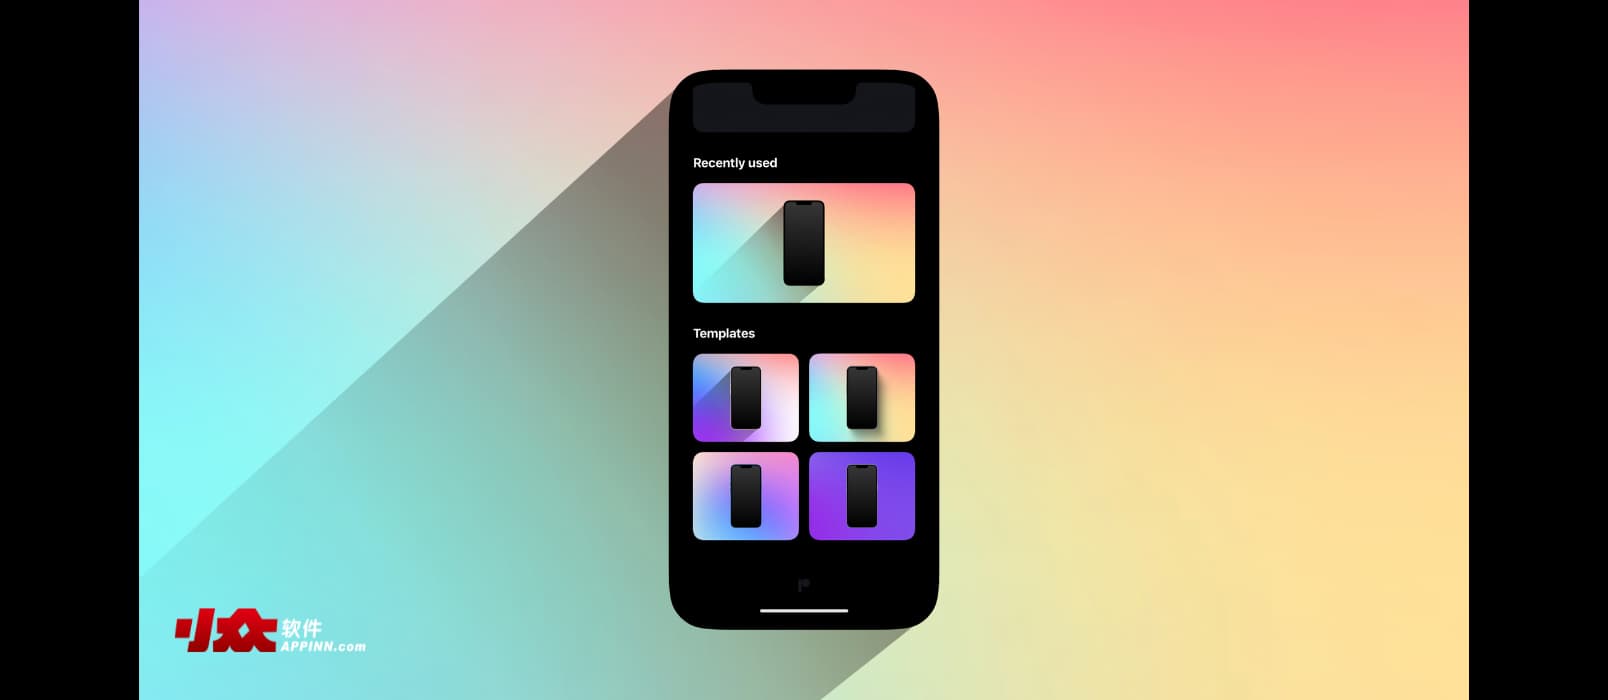 PopFrame - 为 iPhone 截图添加背景与外壳，支持视频